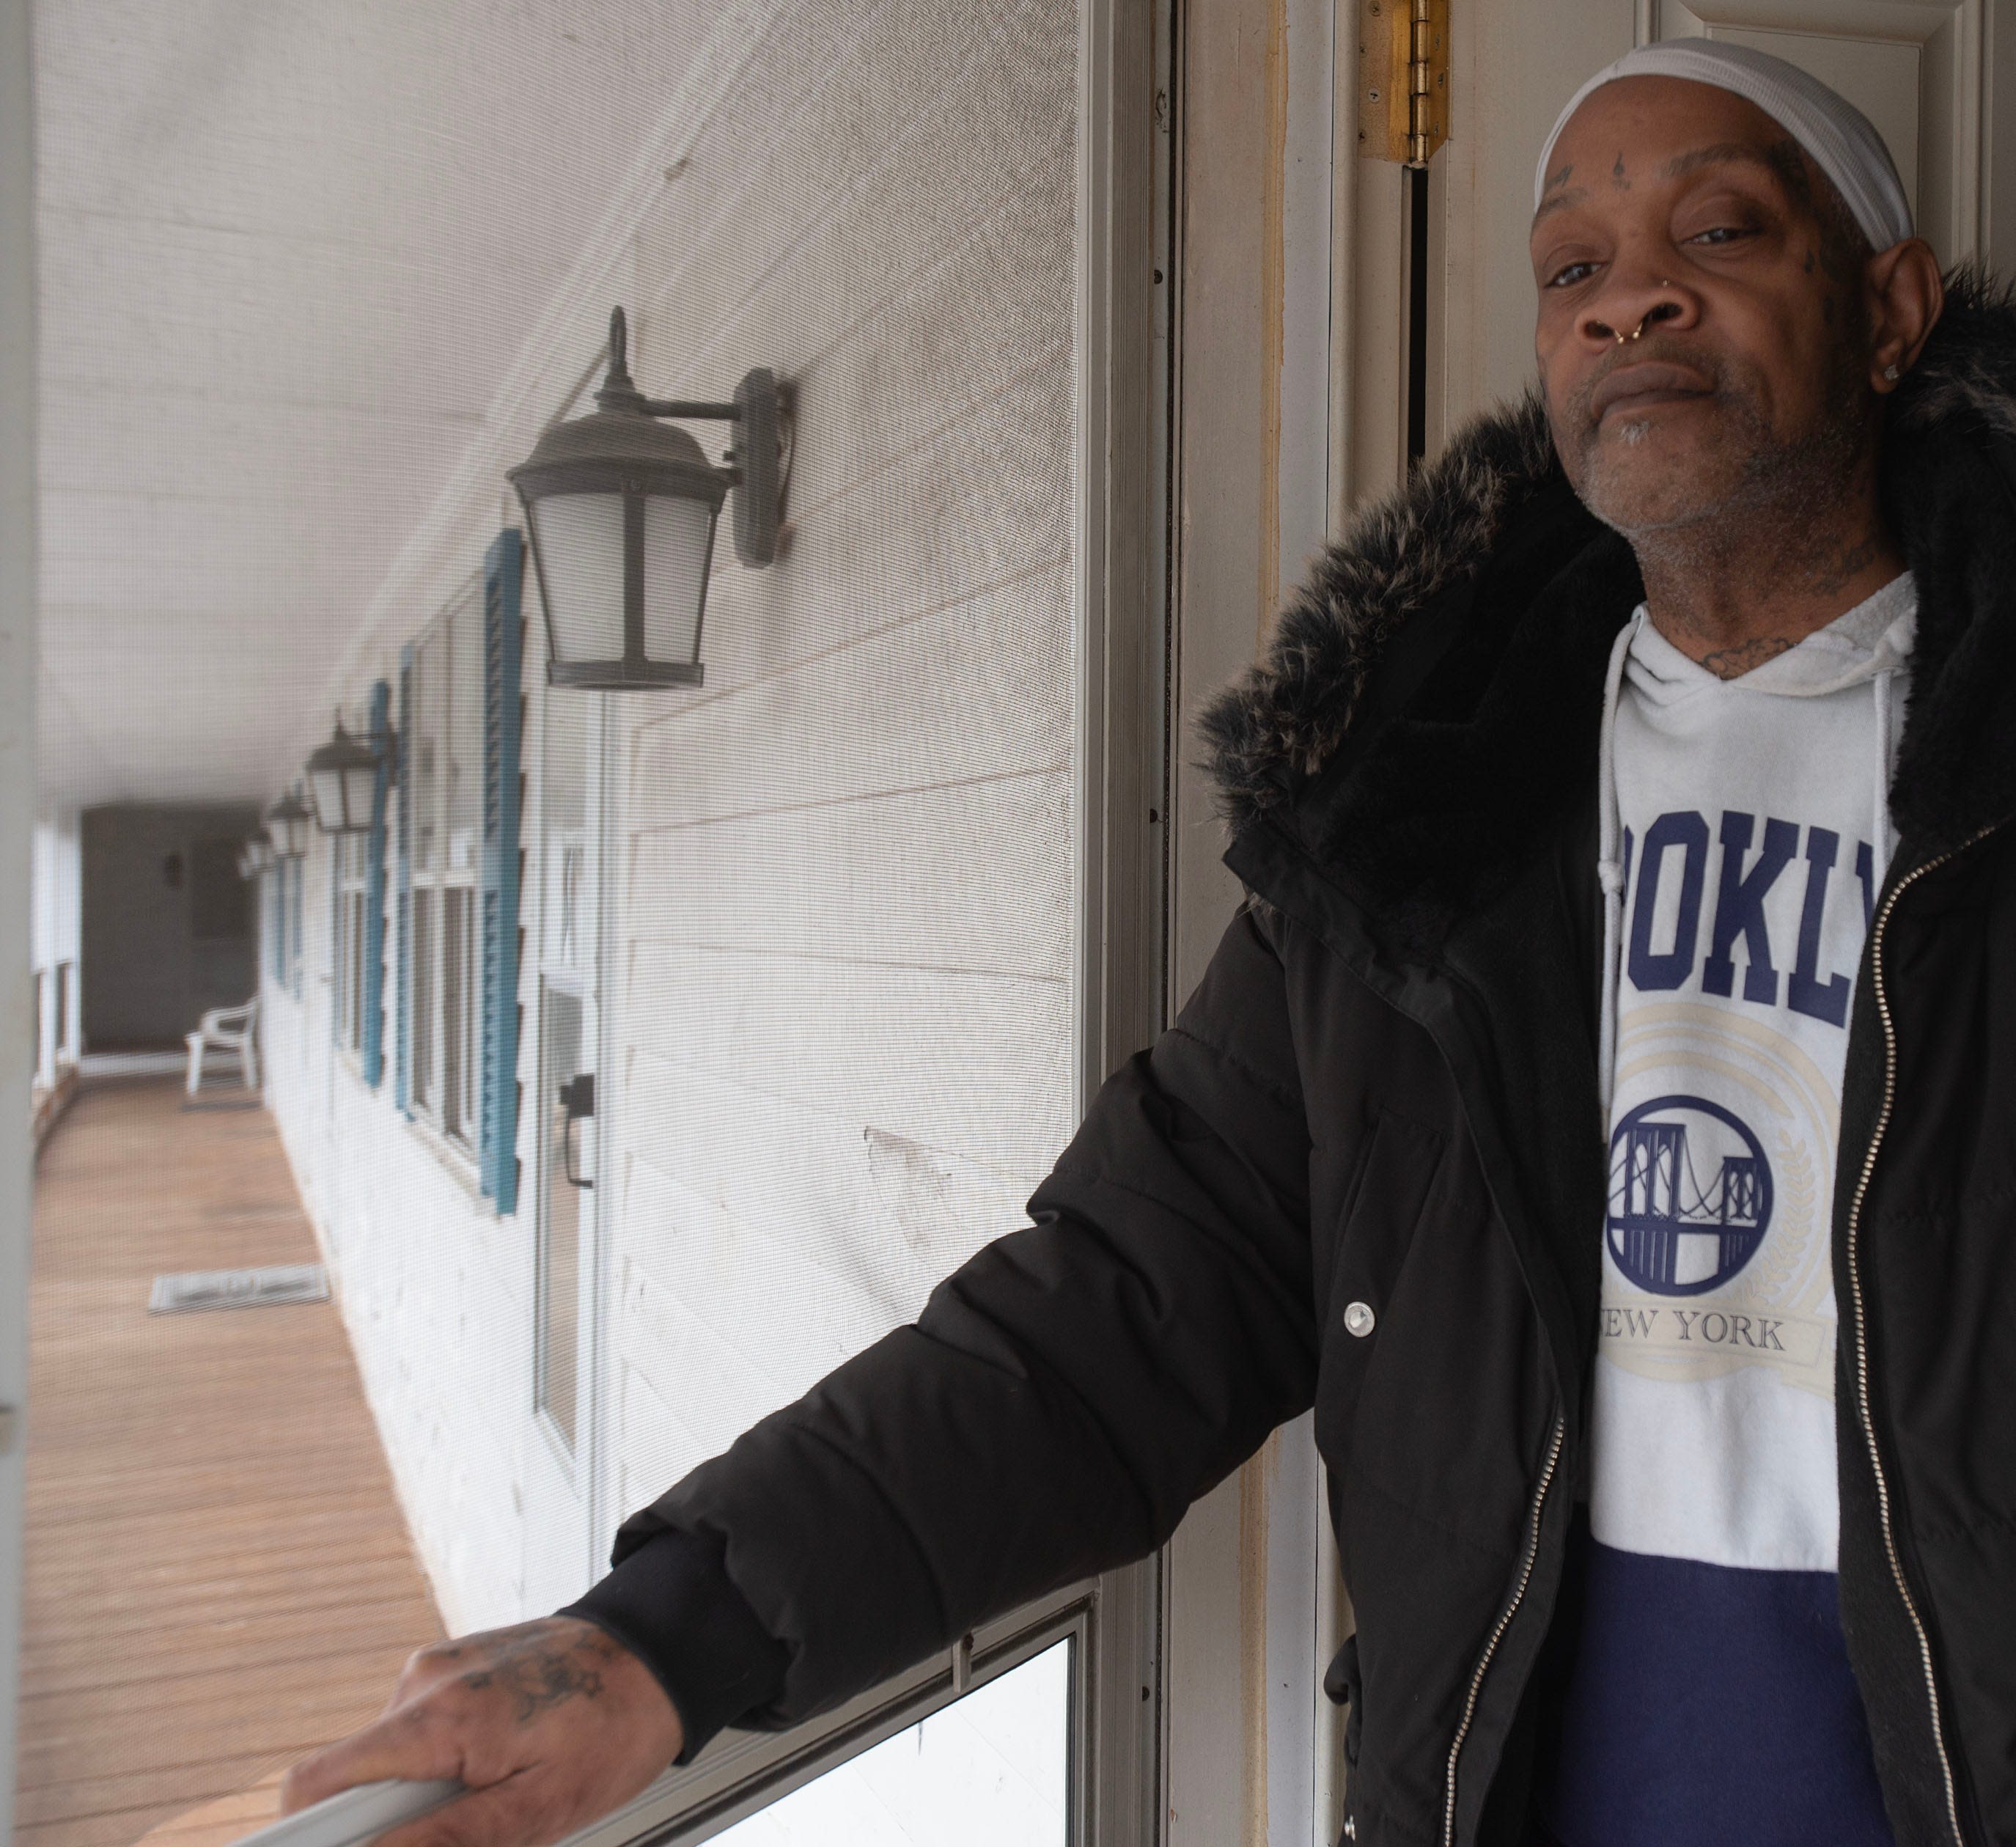 'On the street.' Despite housing voucher, West Dennis man faces eviction